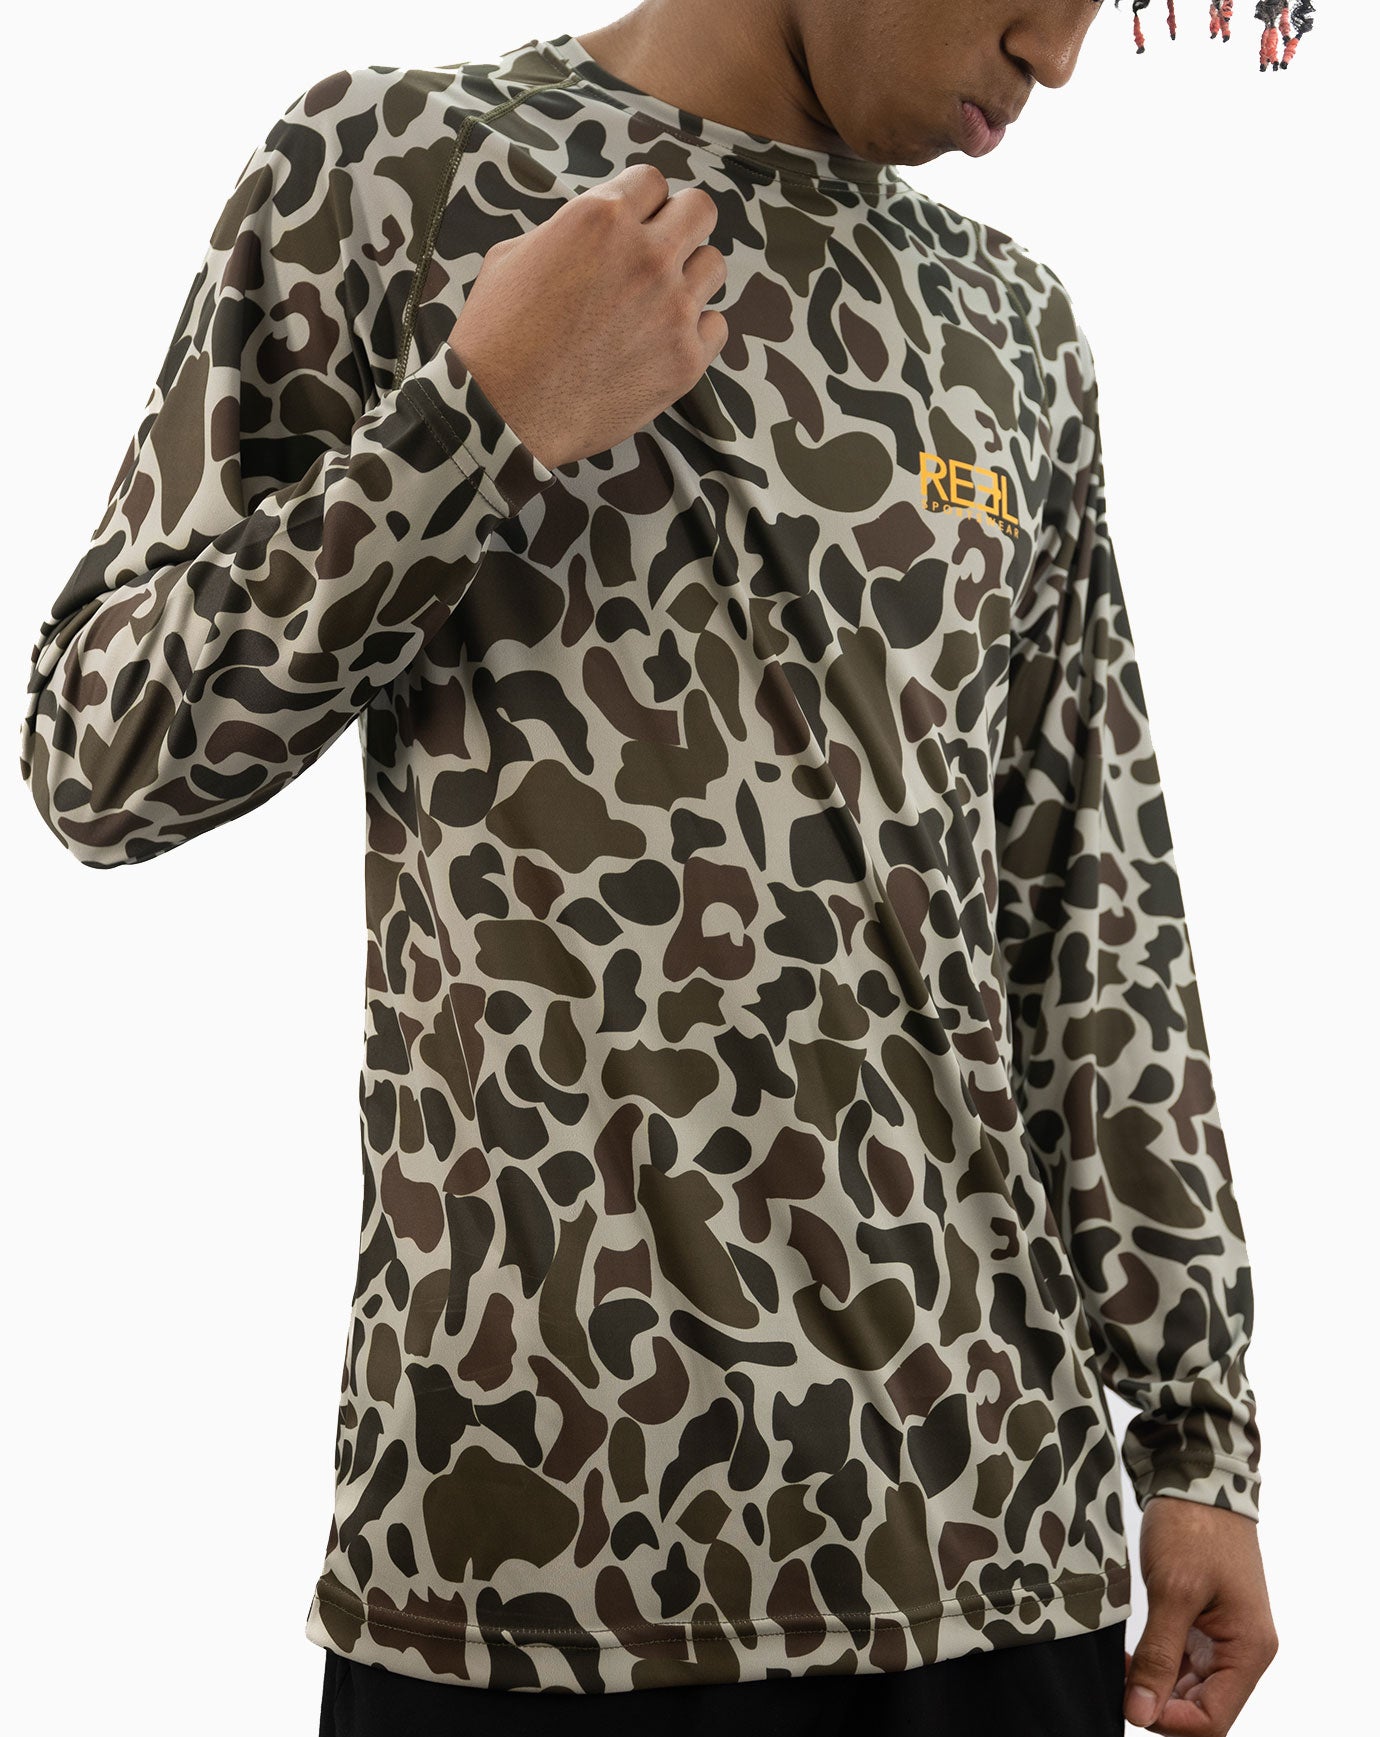 New Paragon reel cool dad gift Fishing Long Sleeve UPF 50+ Fishing Shirt  XS-4XL